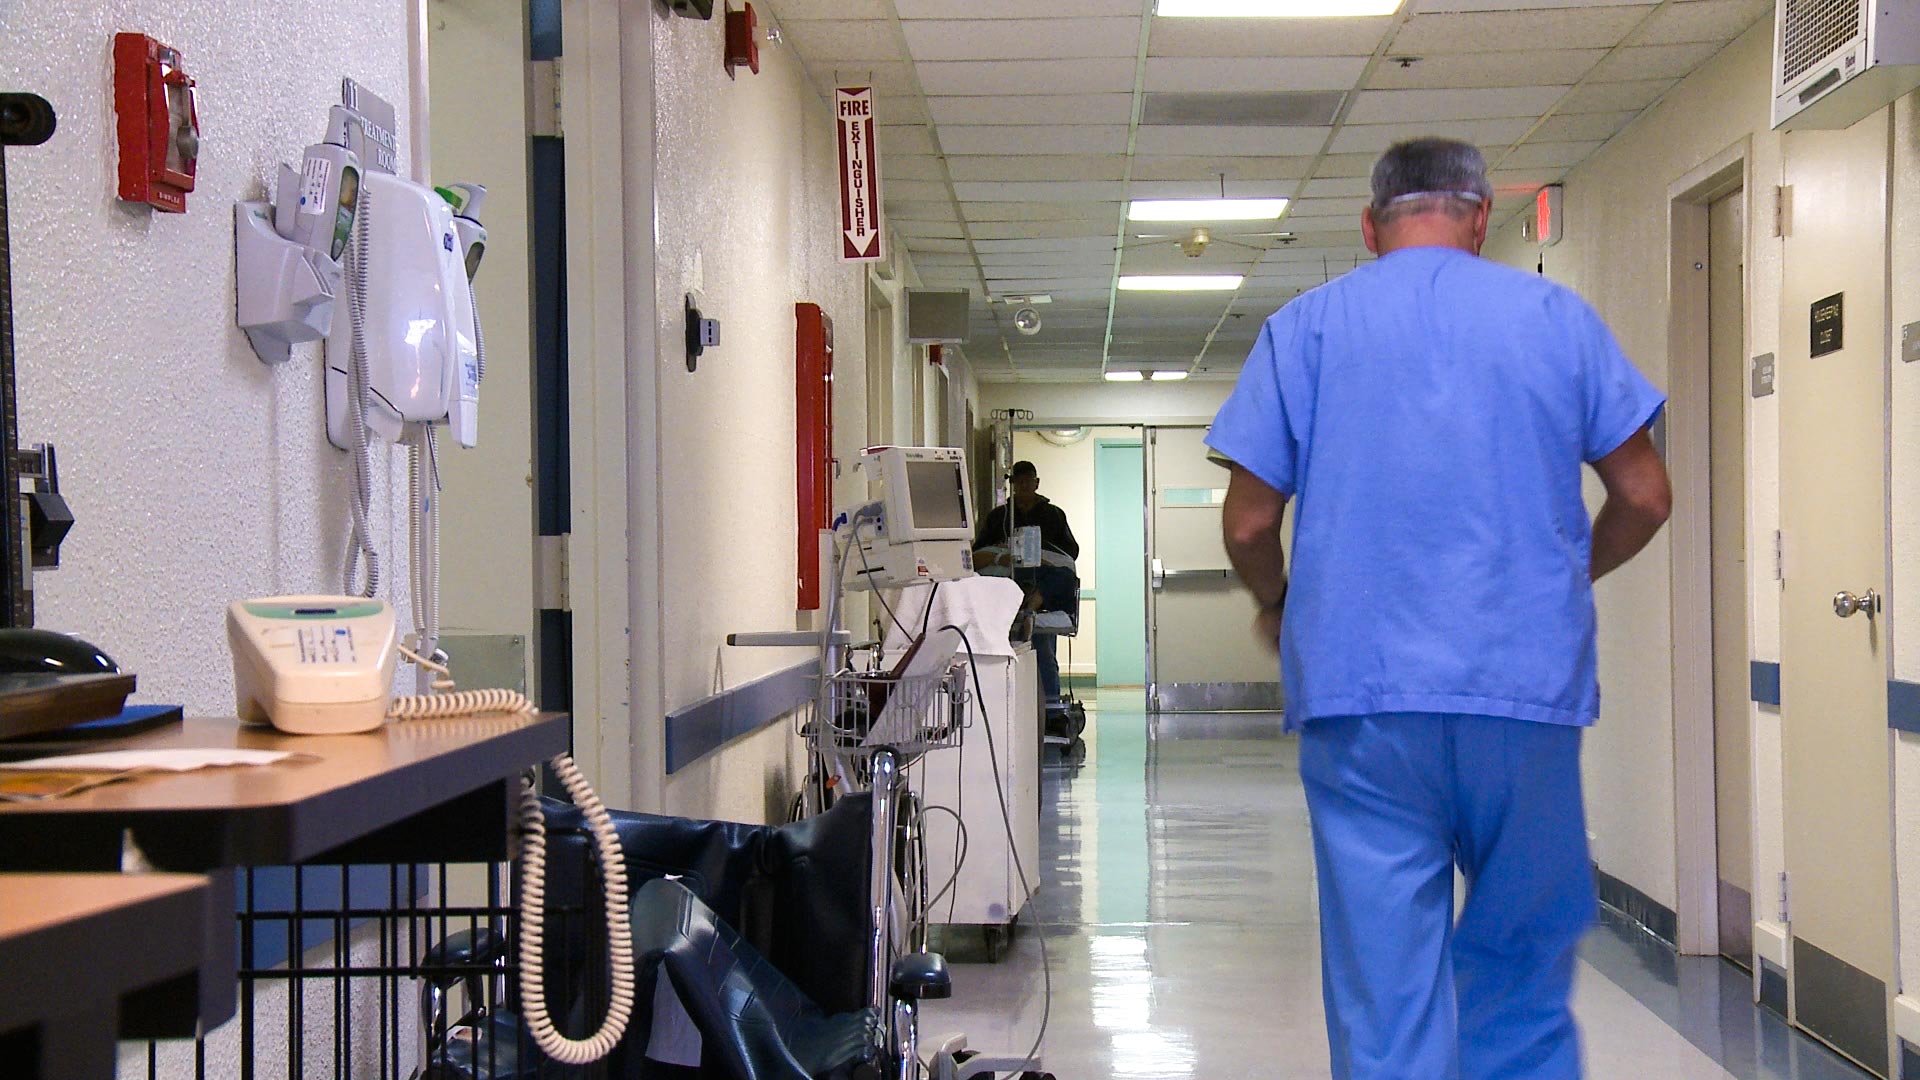 File photo of a hospital hallway.